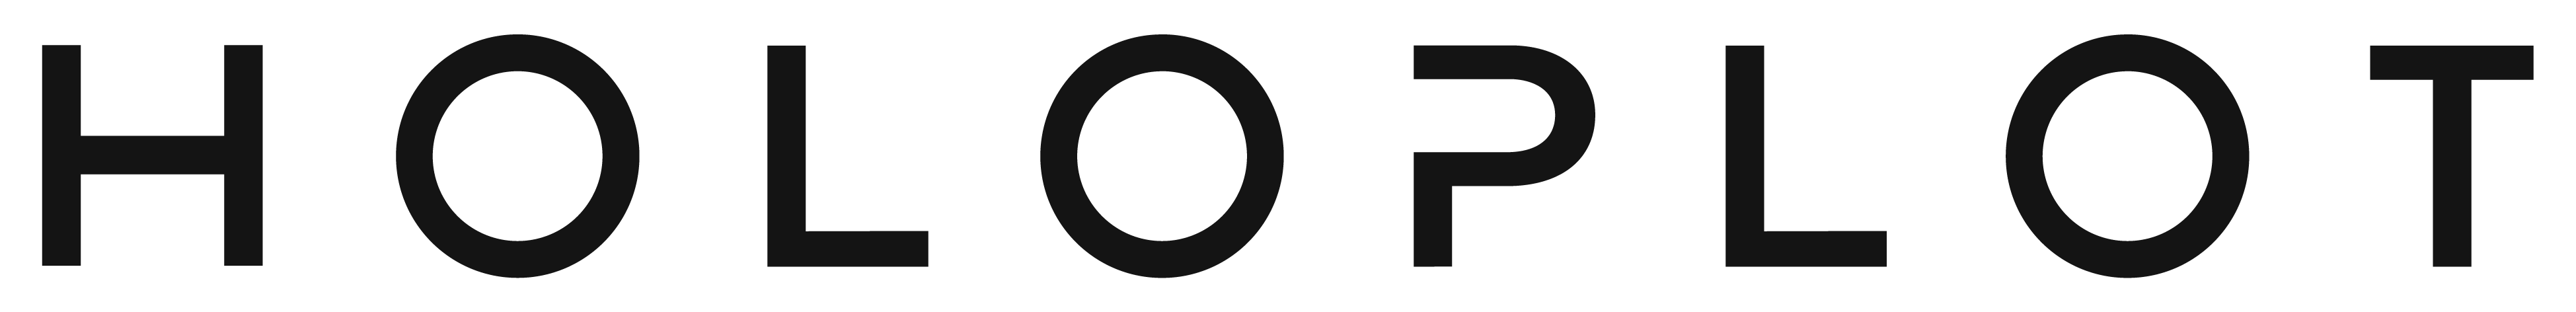 HOLOPLOT logo